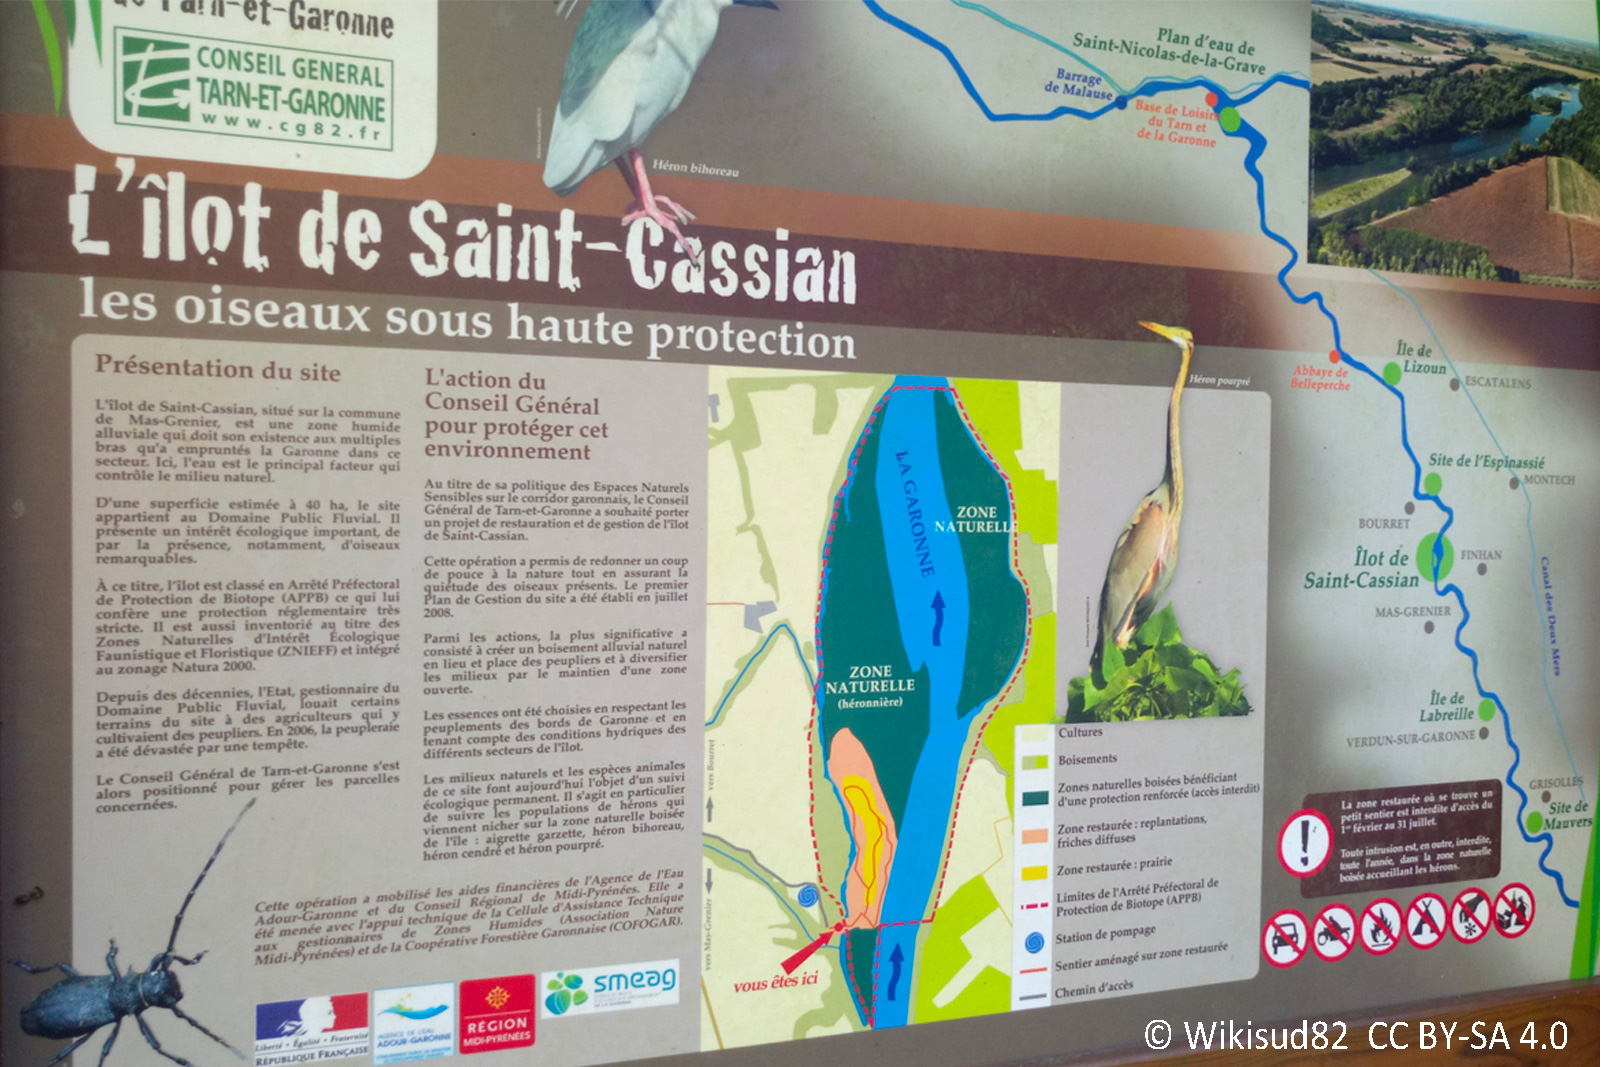 The islet of Saint-Cassian